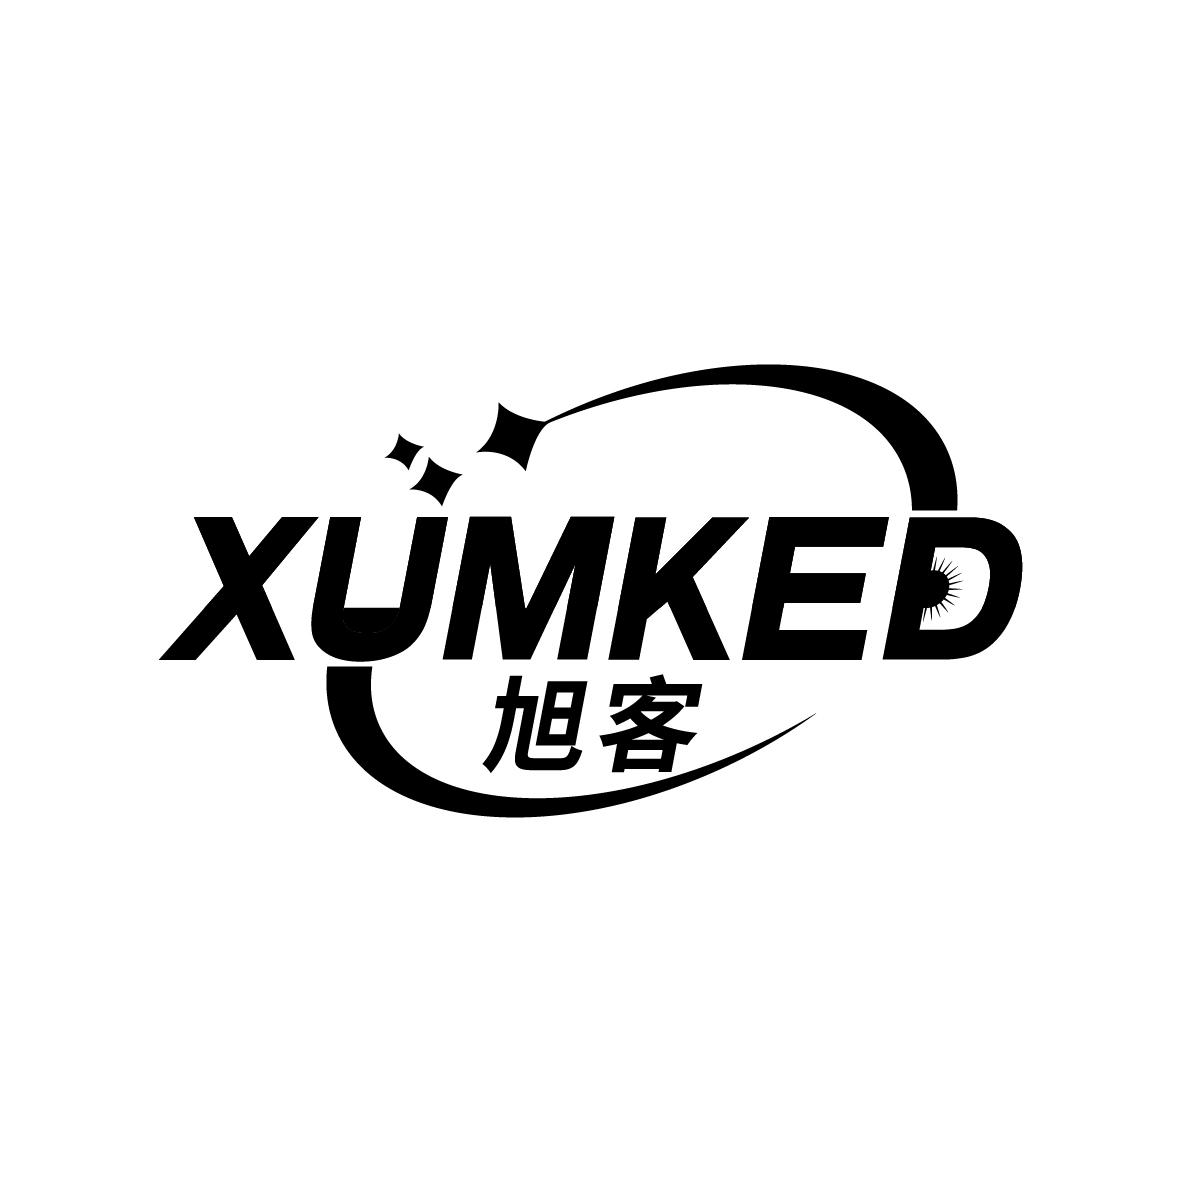 旭客 XUMKED商标转让